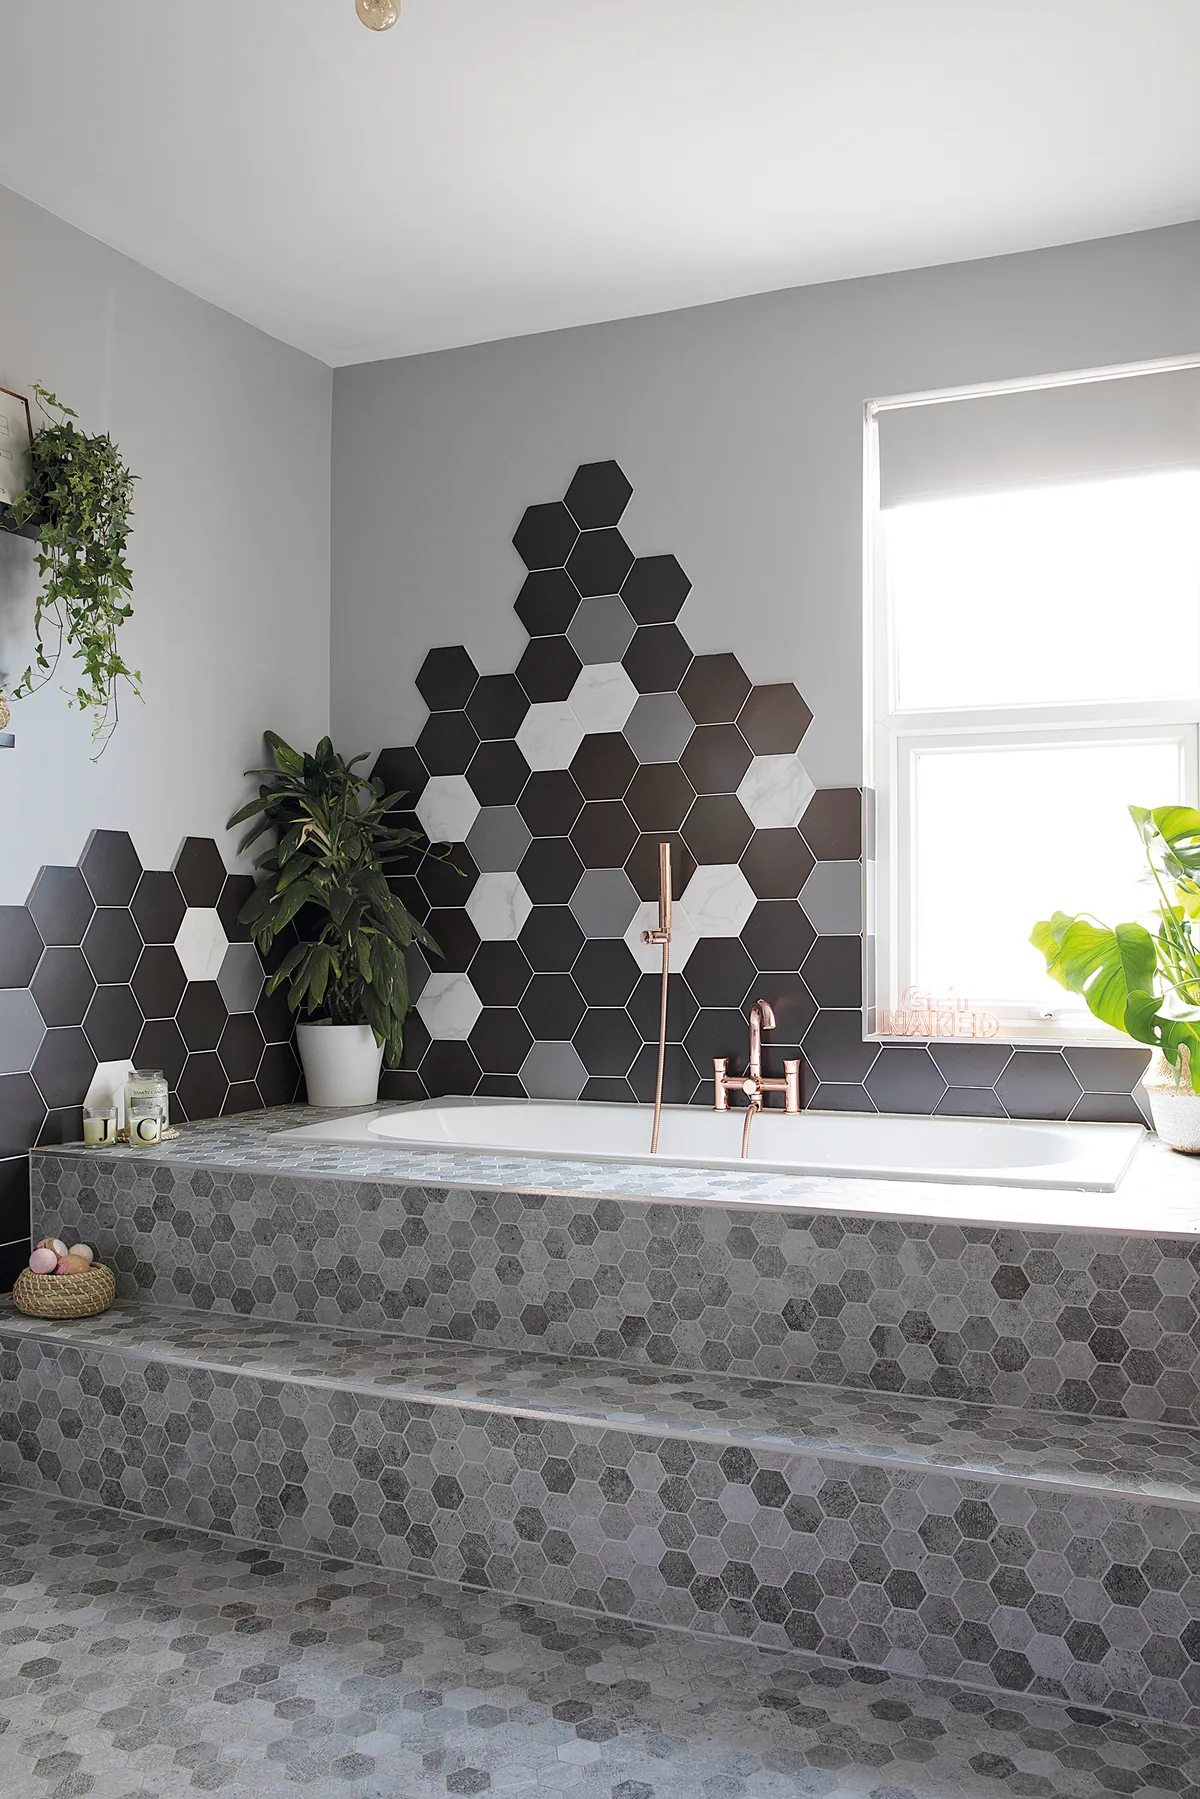 A boutique style bathroom with hexagon wall tiles